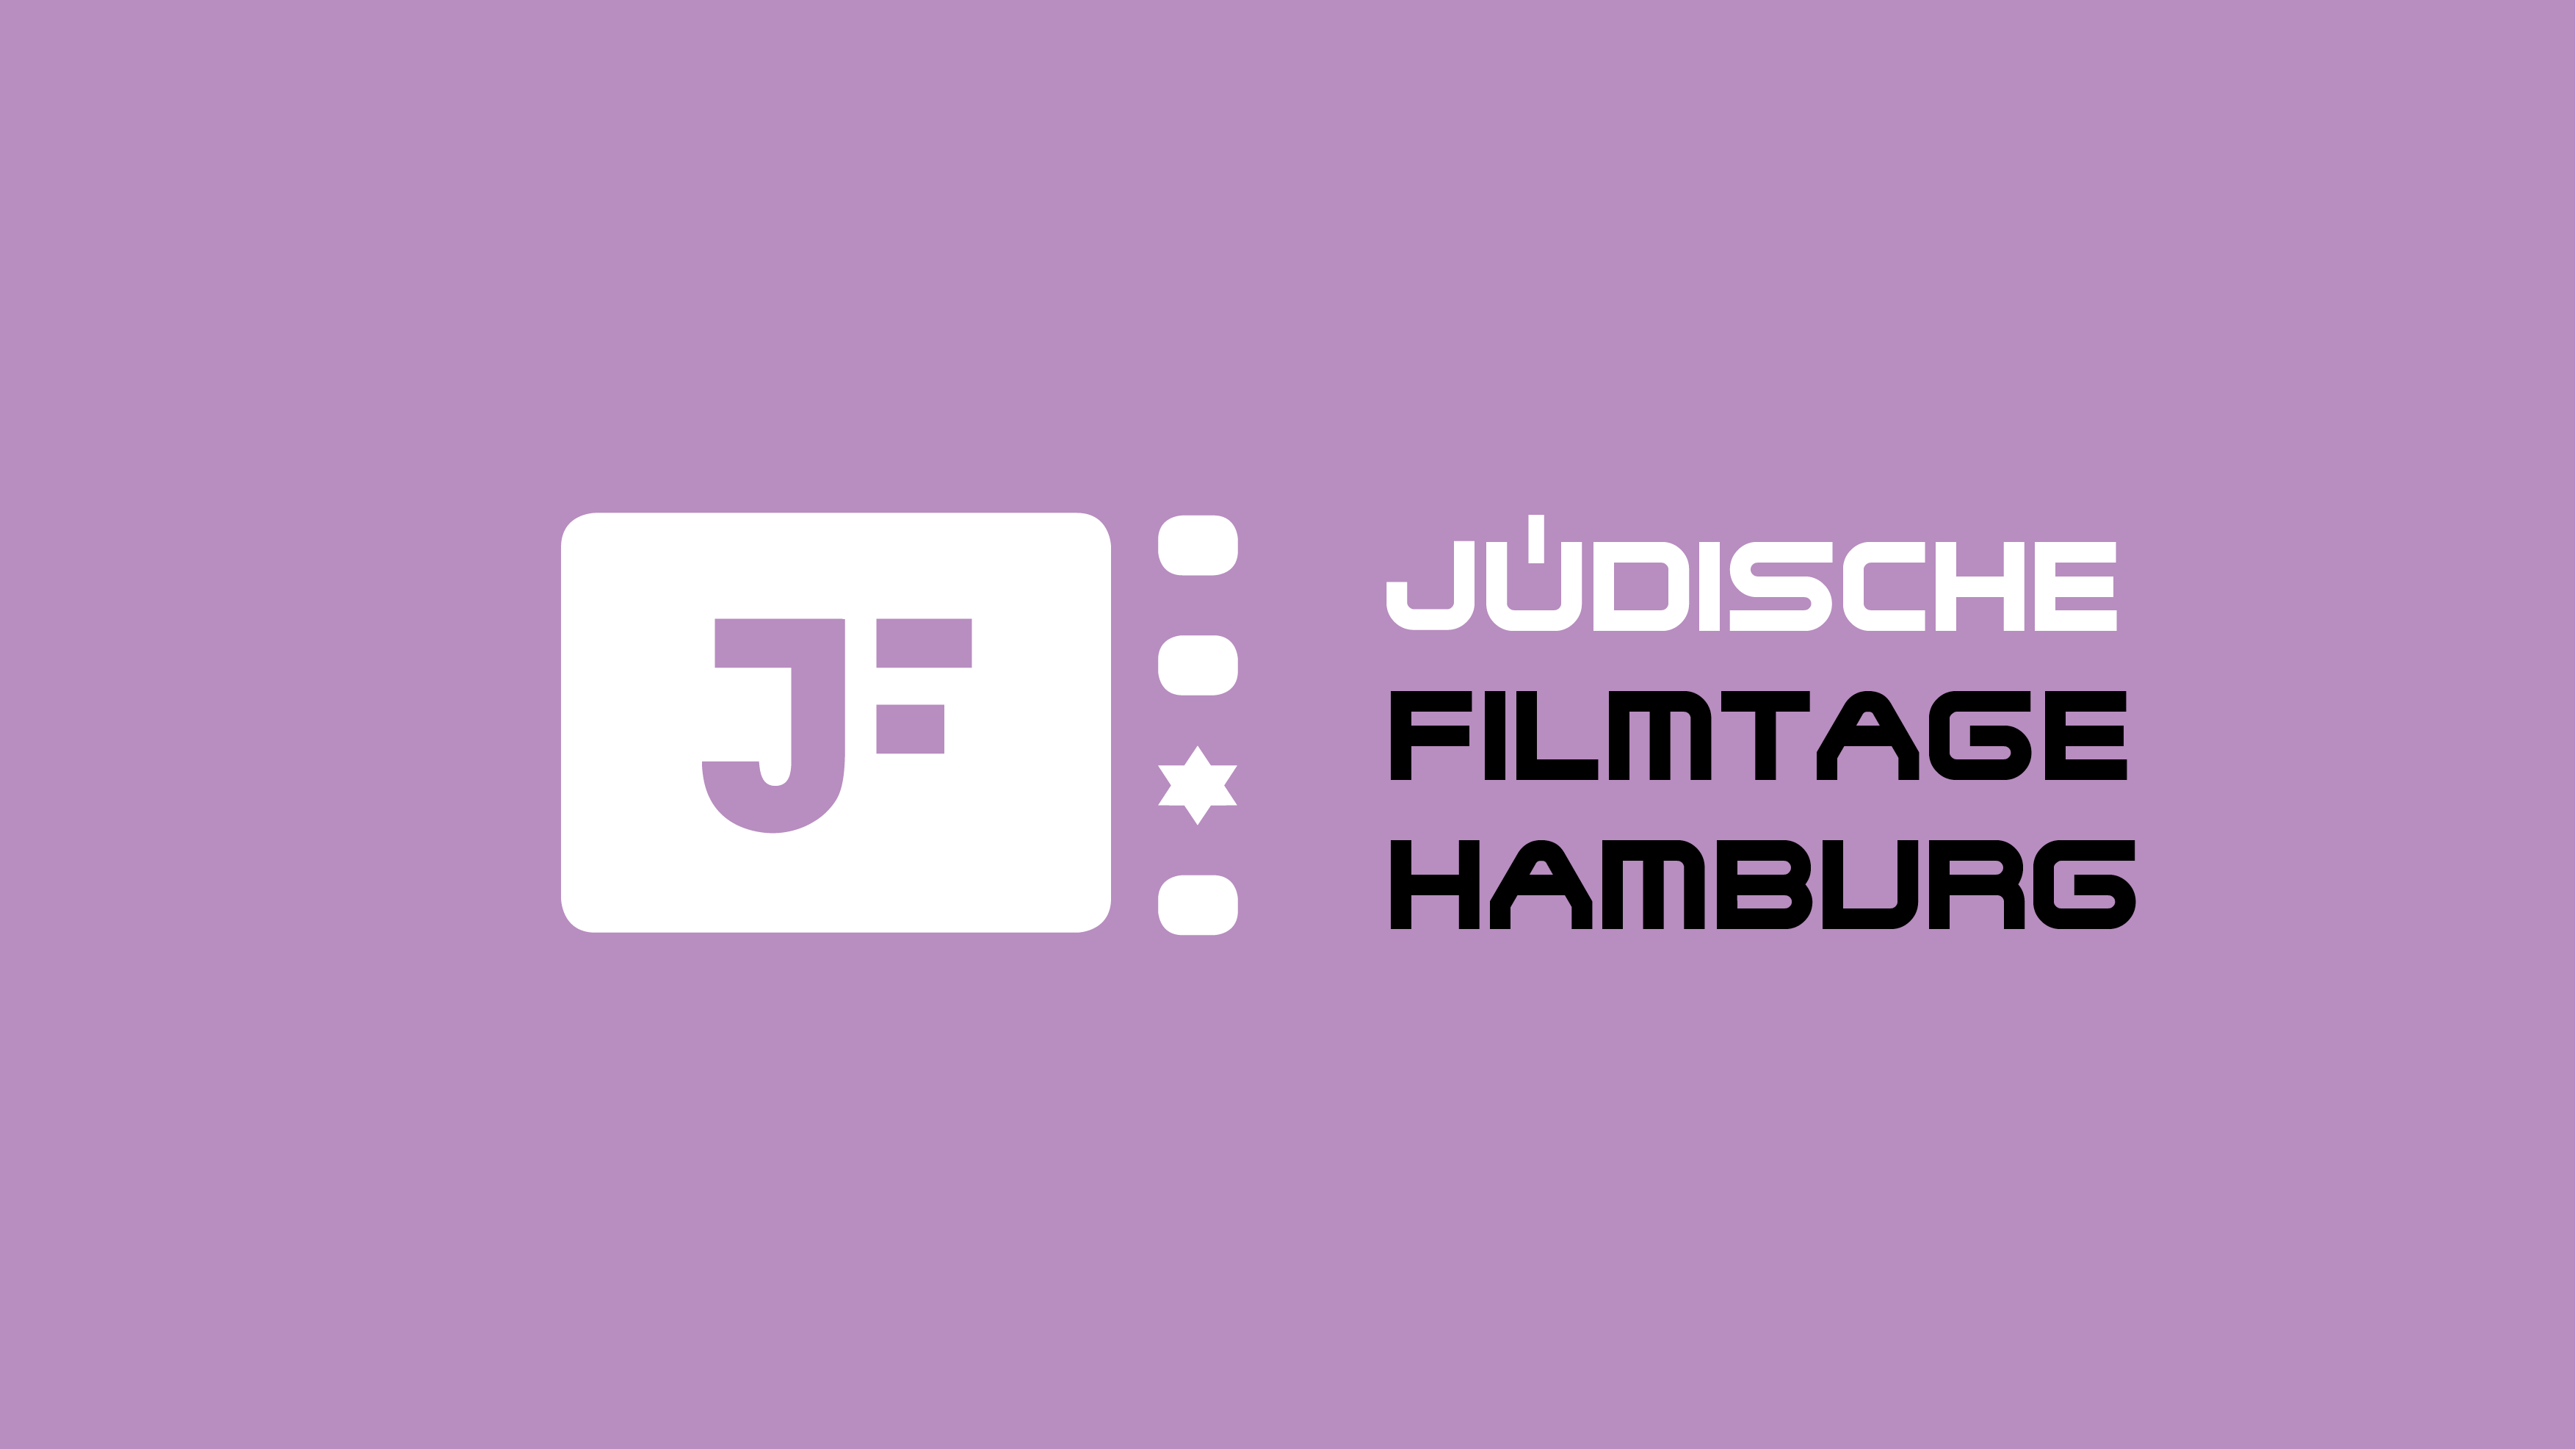 Jüdische Filmtage Hamburg: 03.07. – 07.07.2022 im Abaton-Kino